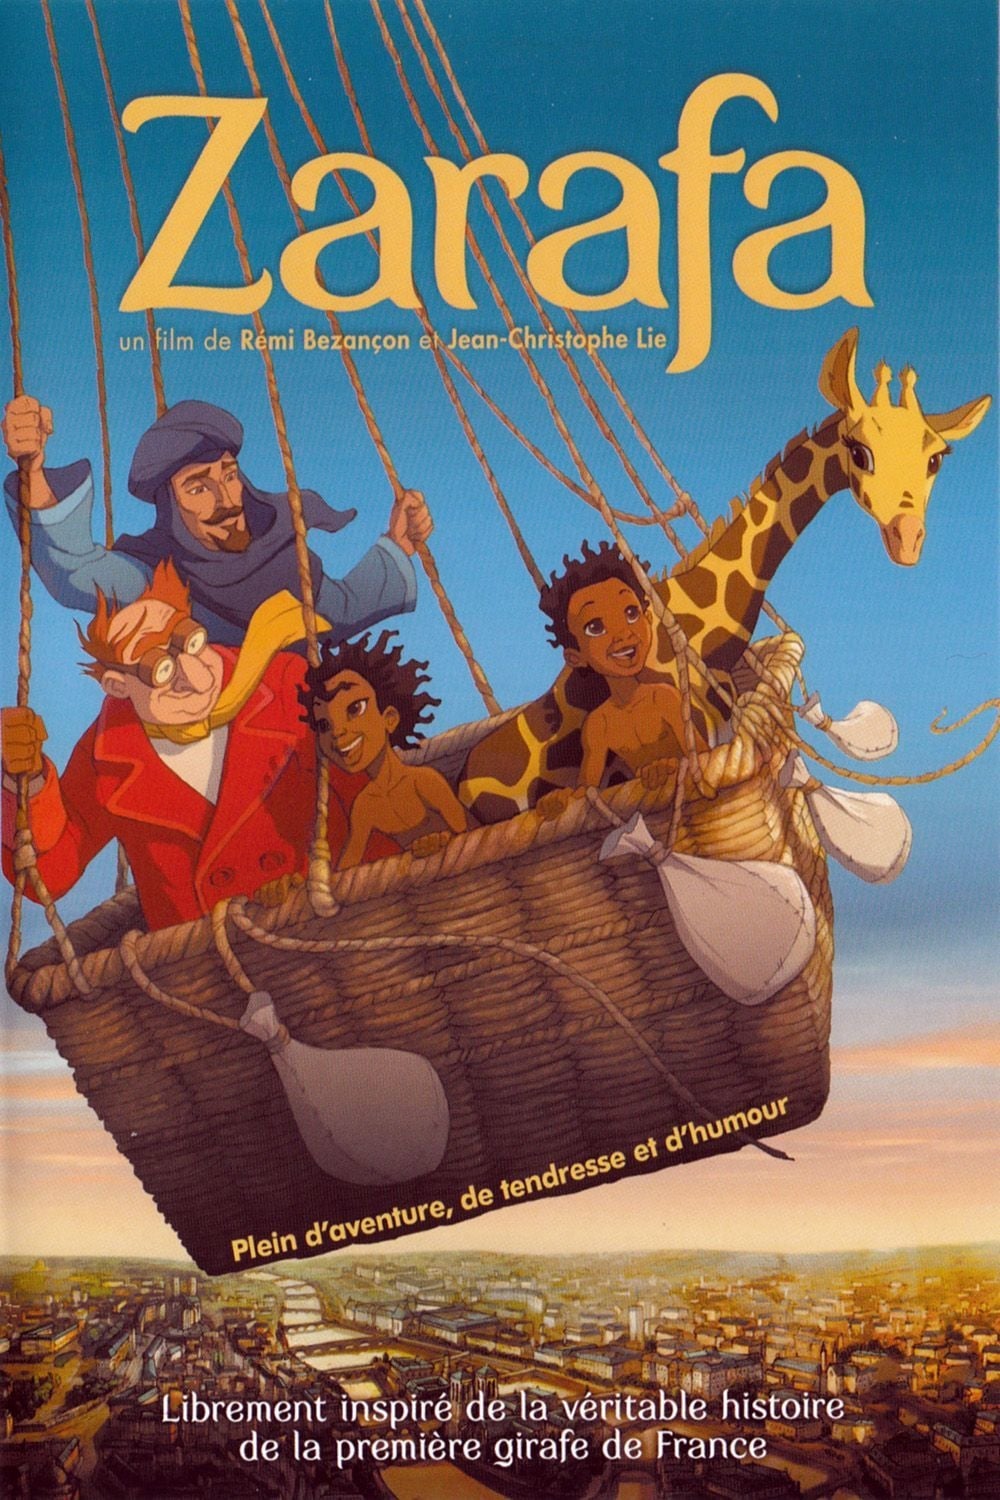 Zarafa-min-List of films and documentaries-en-fr Atlantic slave trade